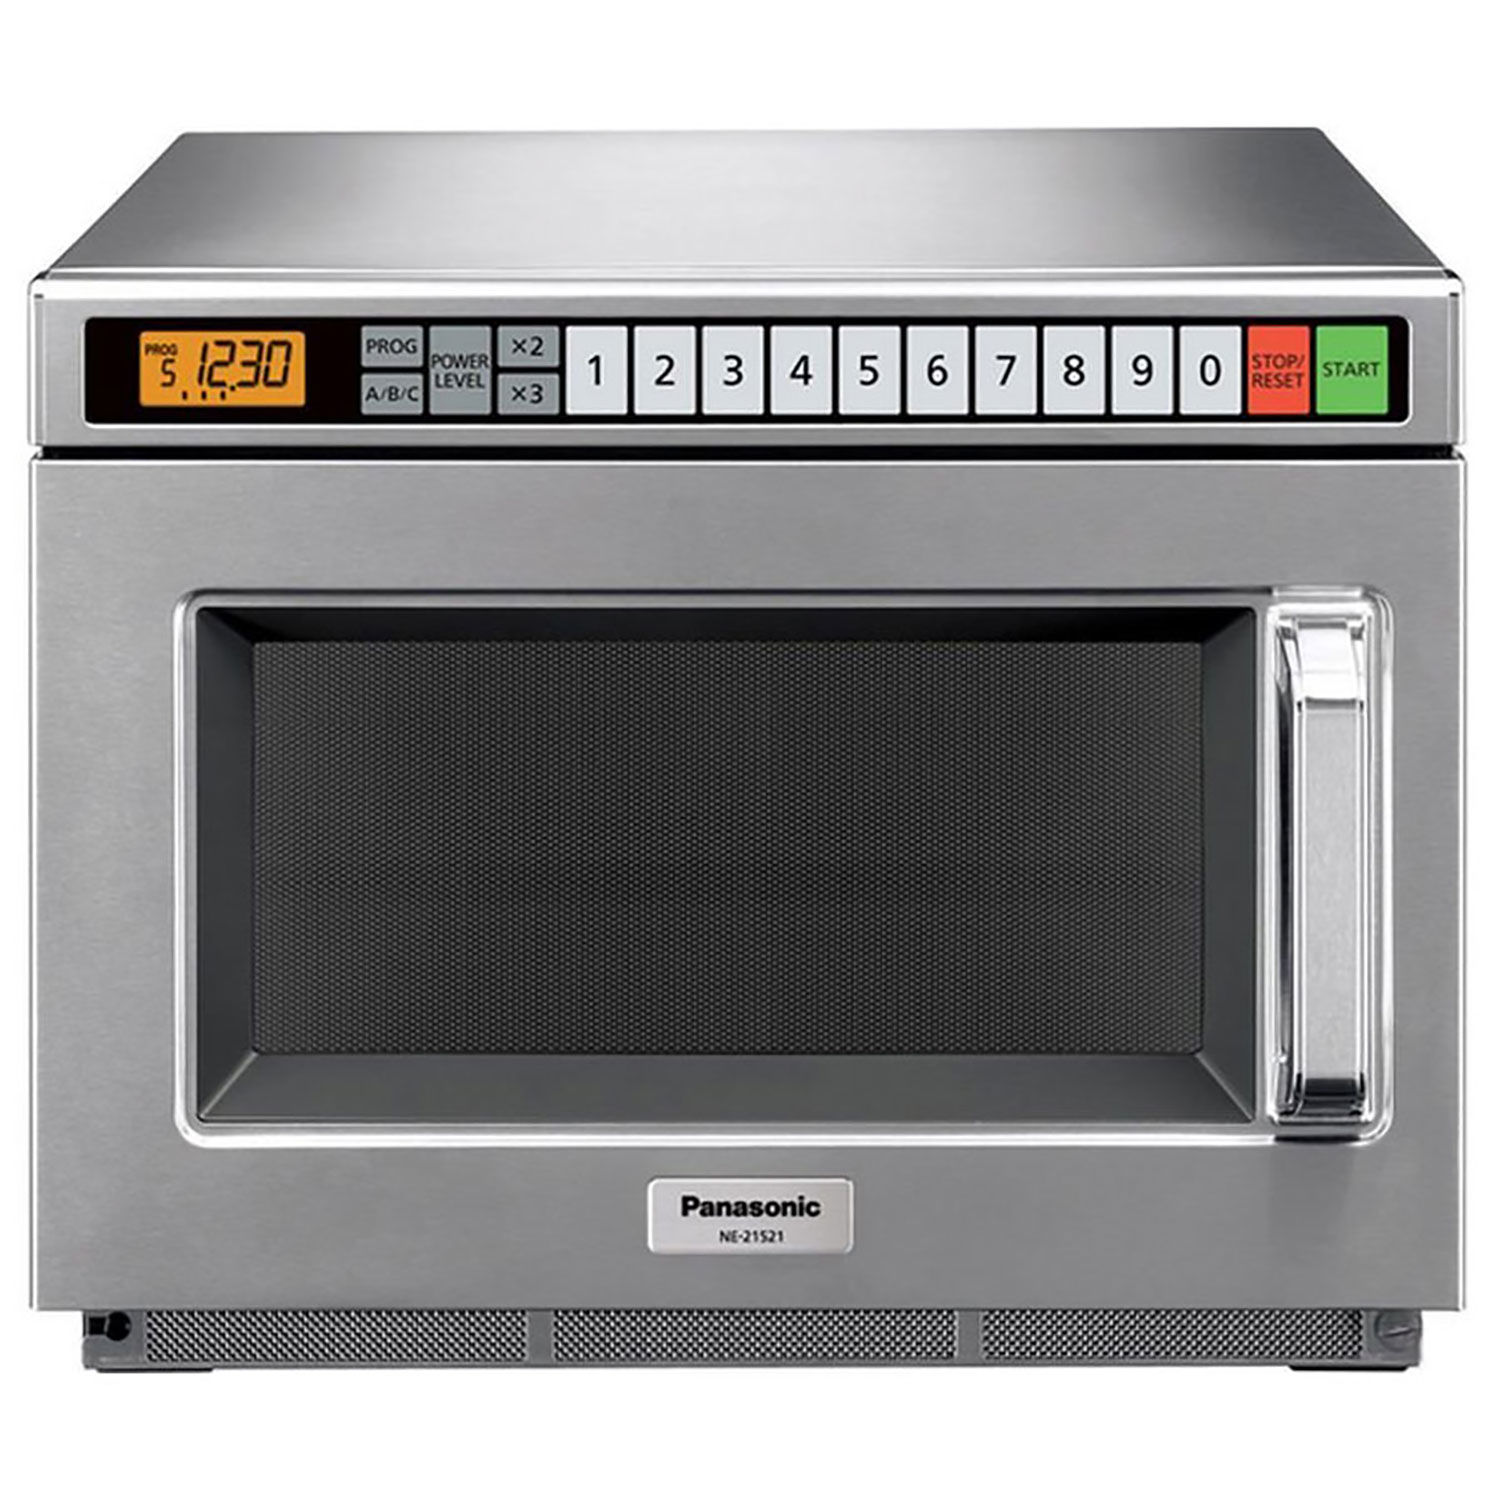 Panasonic NE-21521 - Commercial Microwave Oven, 0.6 Cu. Ft., 2100 Watts